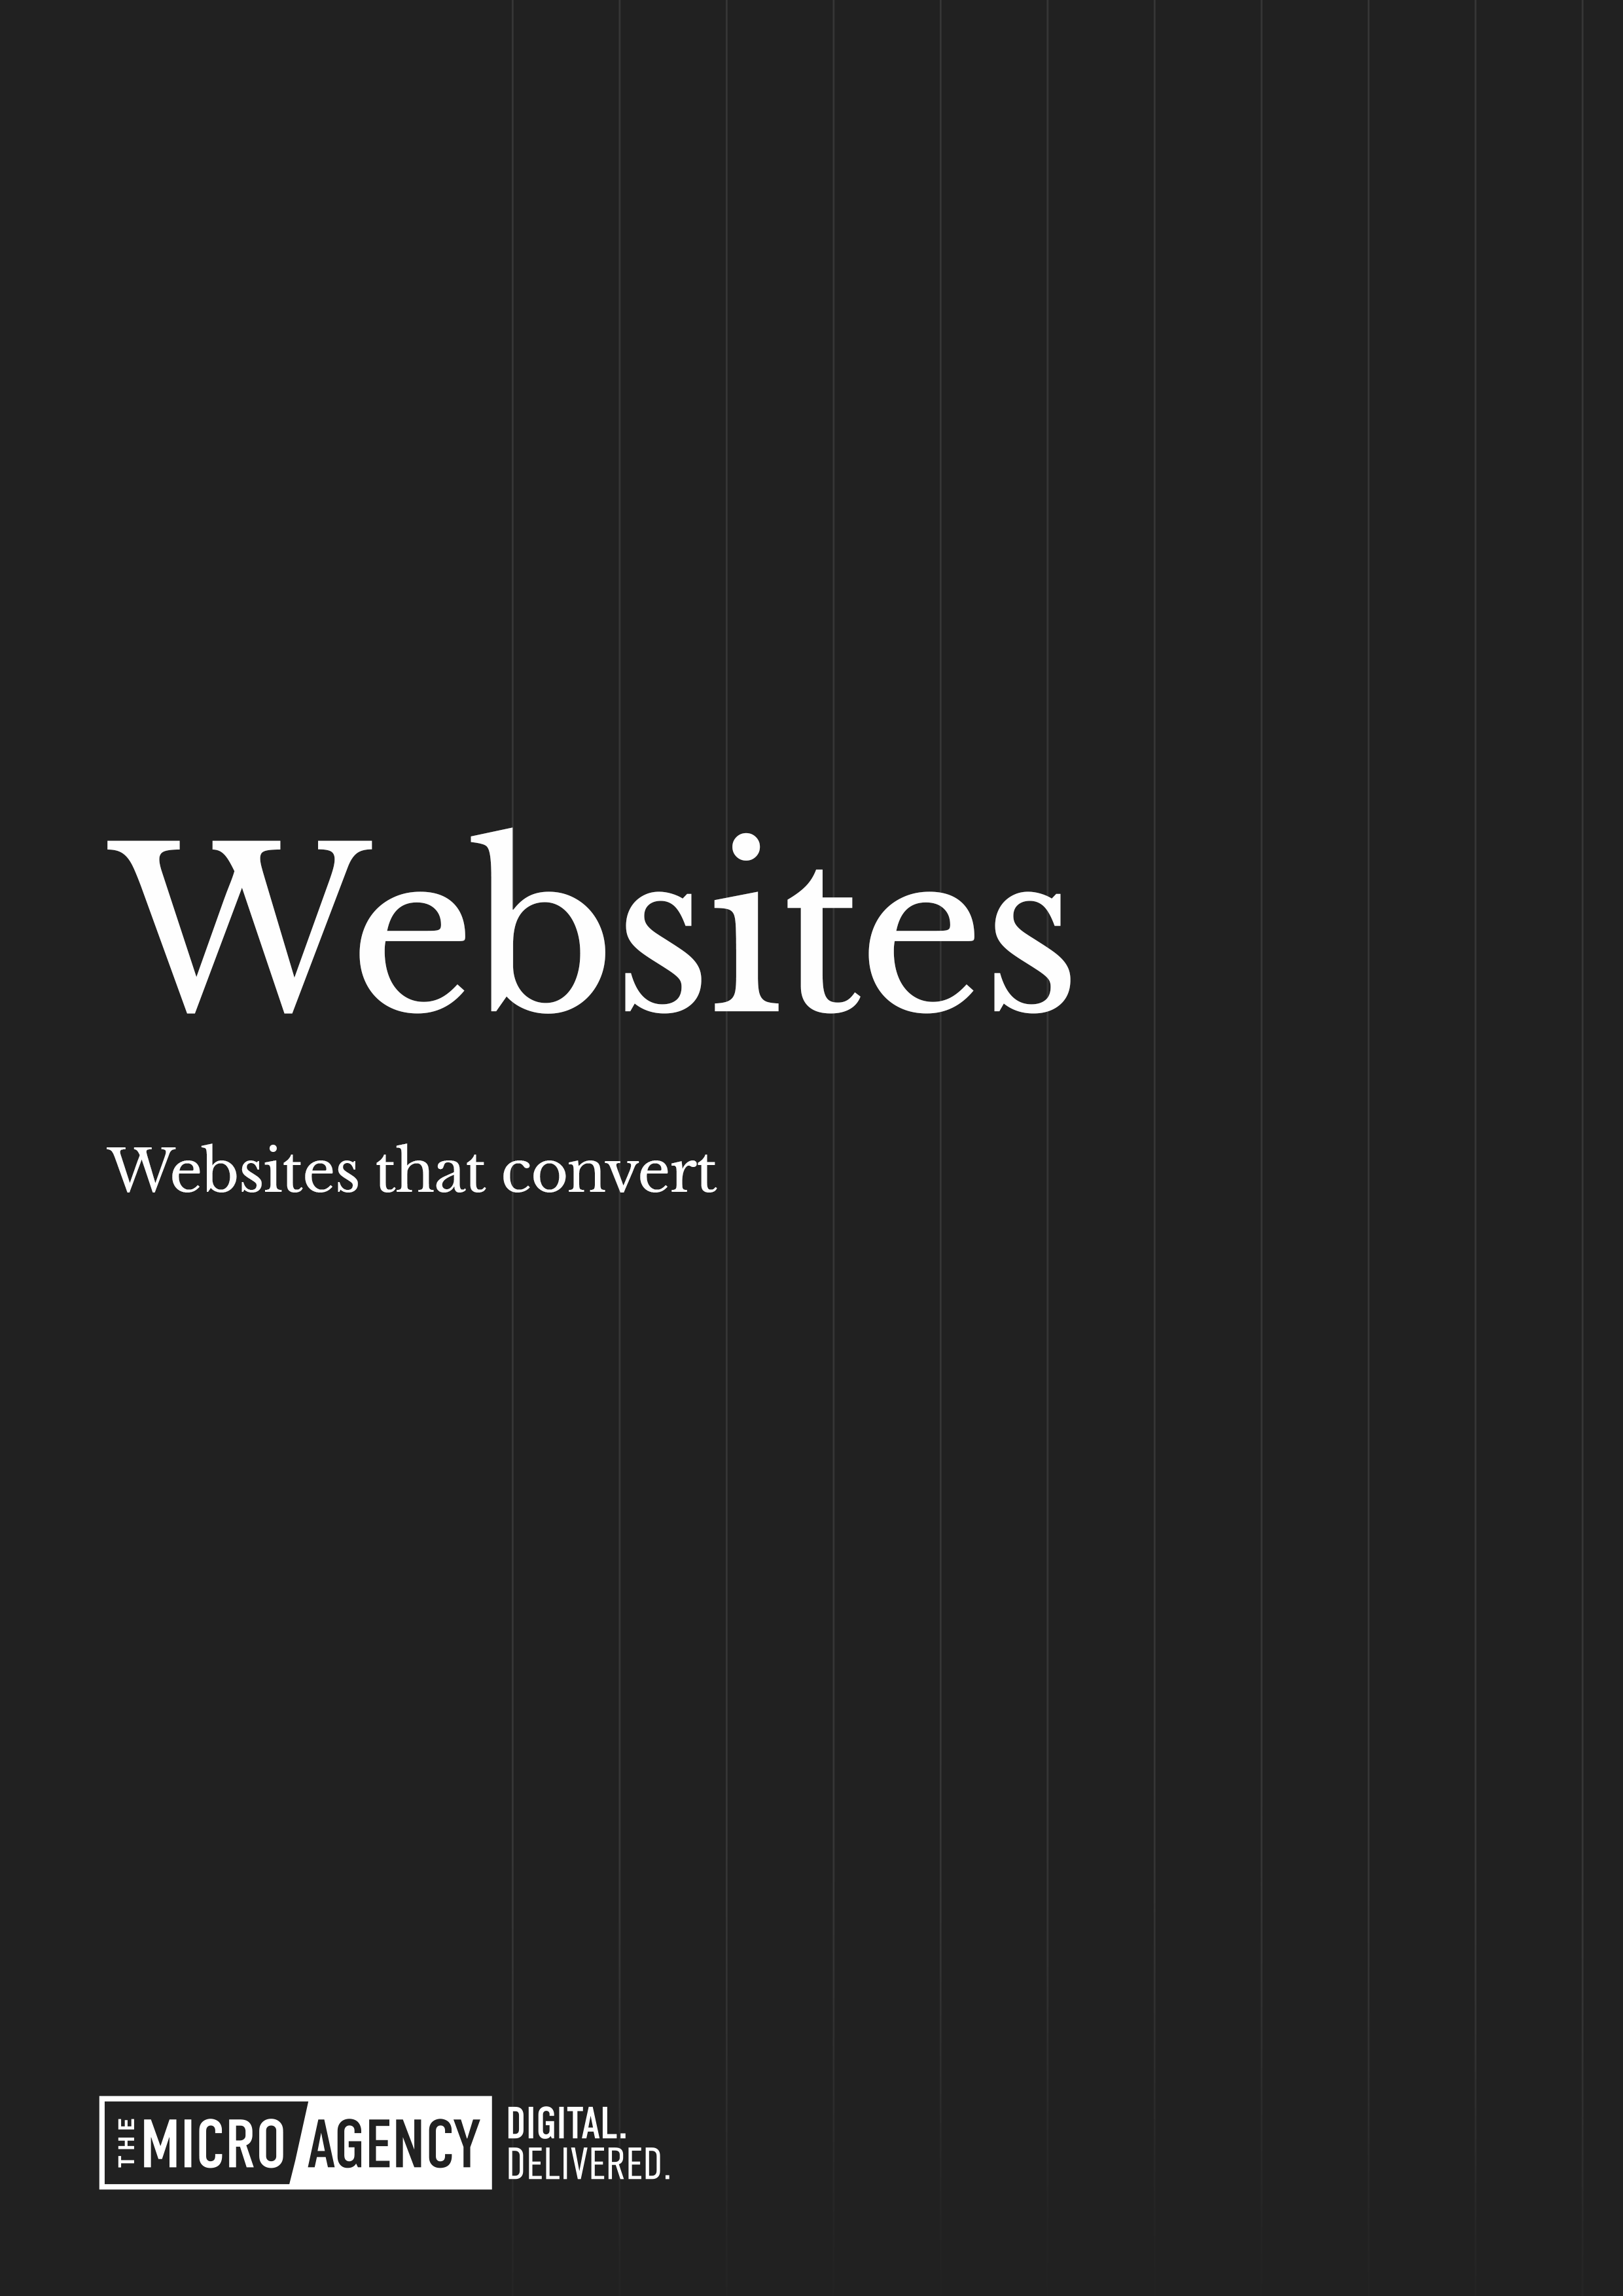 Websites that convert